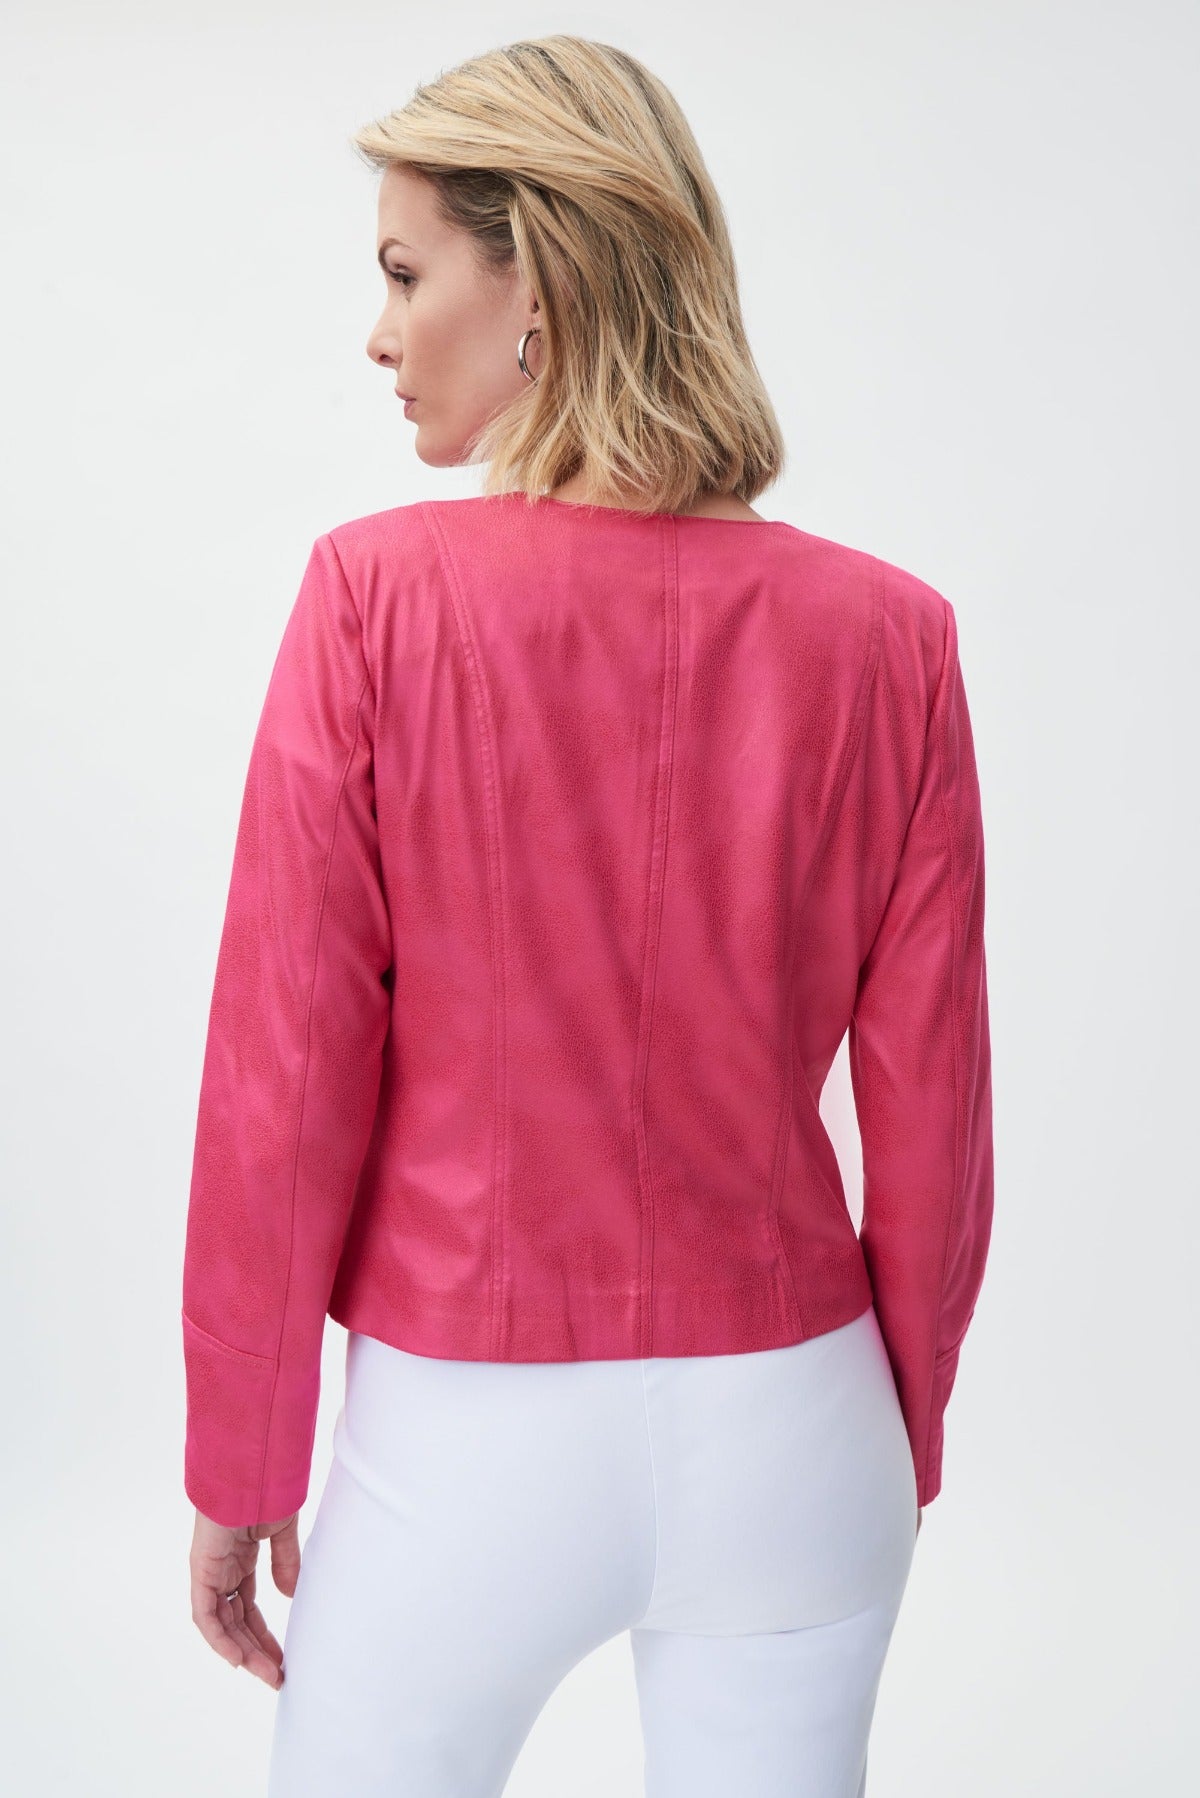 Joseph Ribkoff Dazzle Pink Jacket  231910